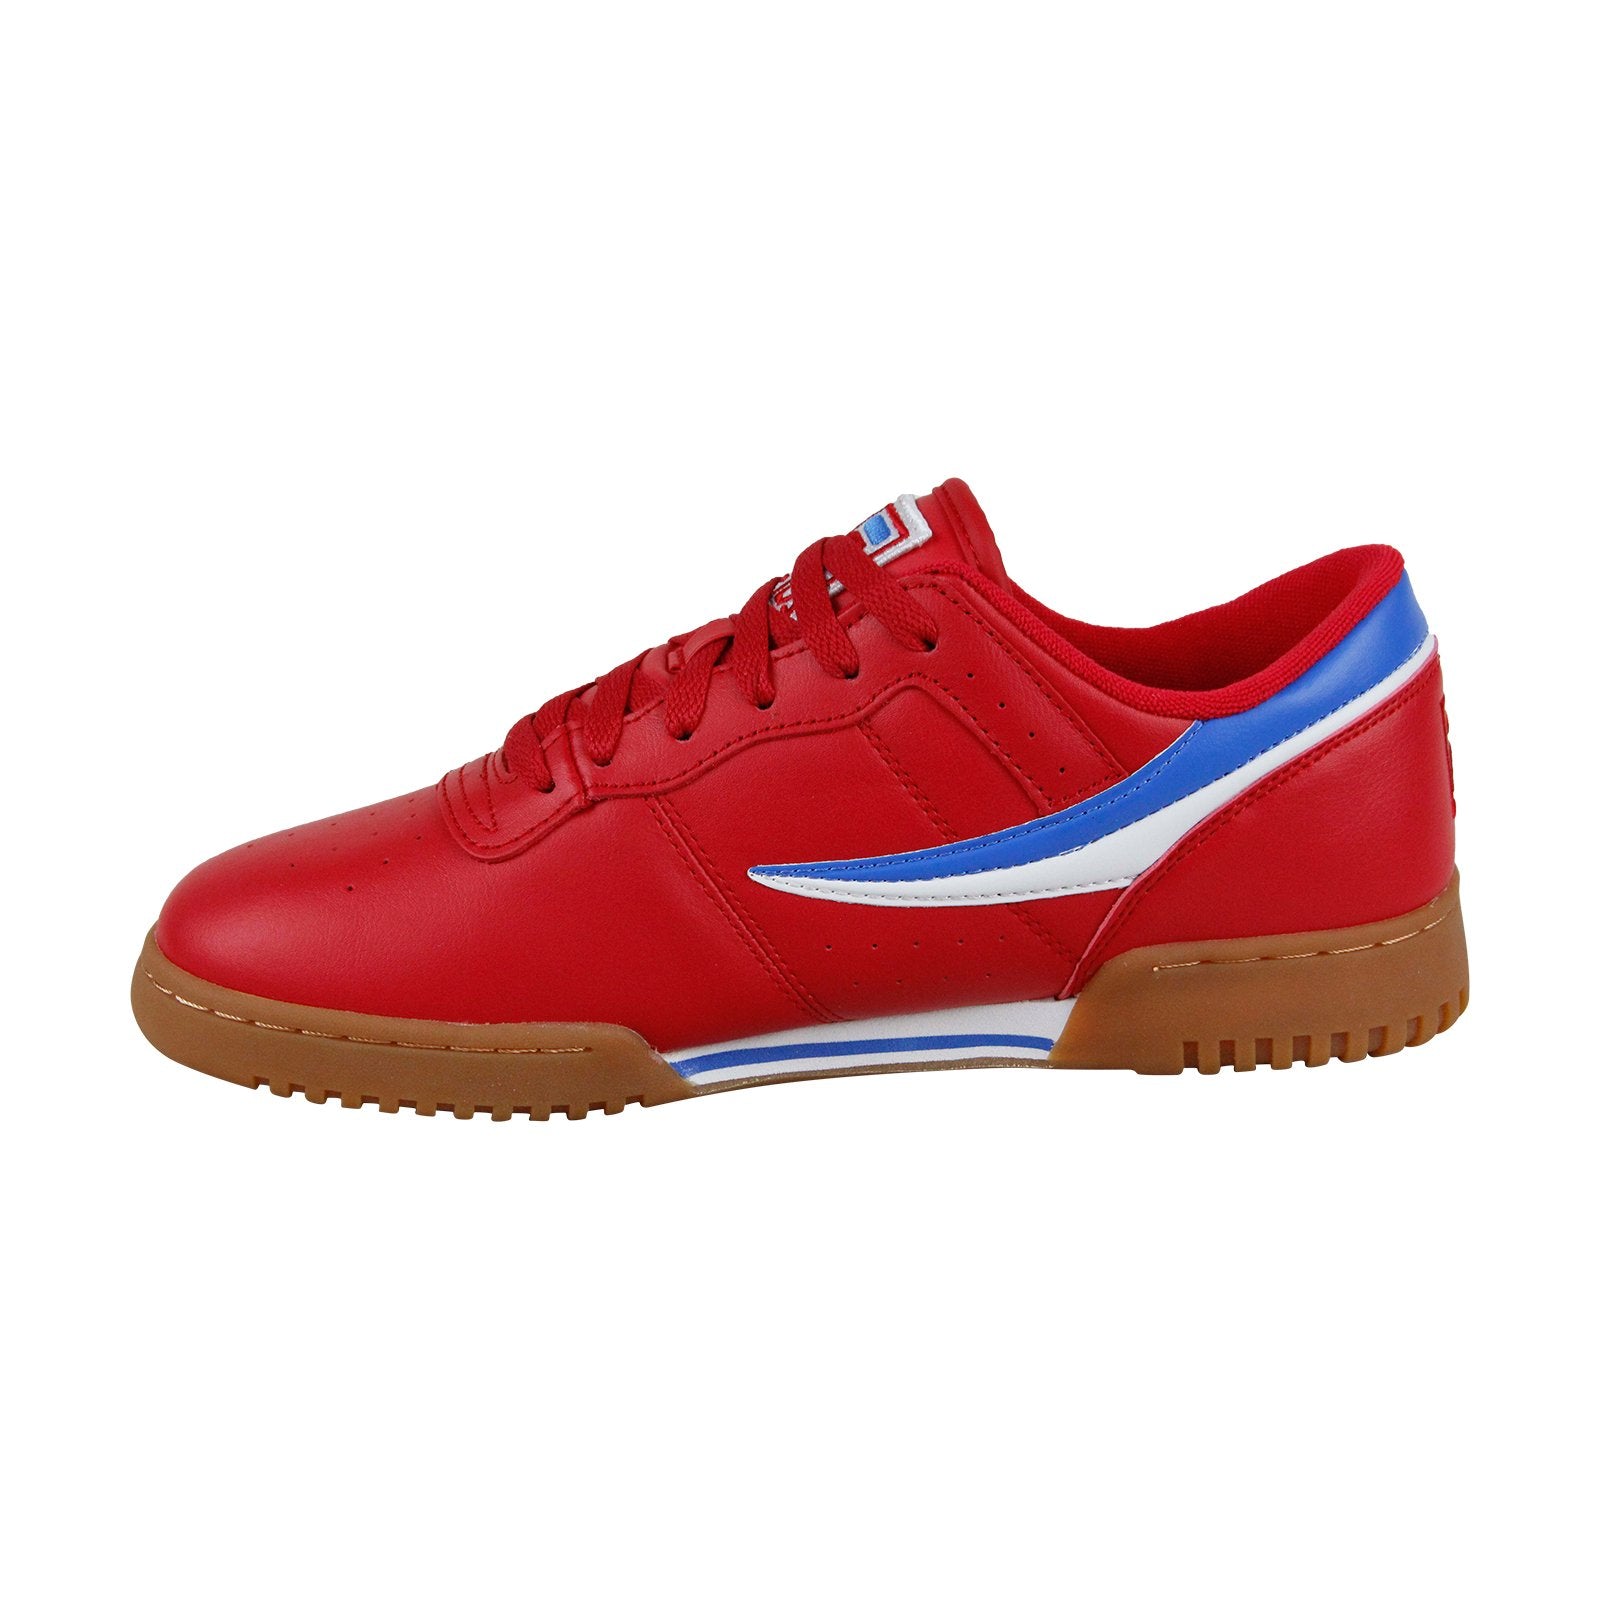 Definición Y así pintar Fila Original Fitness 1FM00442-616 Mens Red Lace Up Lifestyle Sneakers -  Ruze Shoes